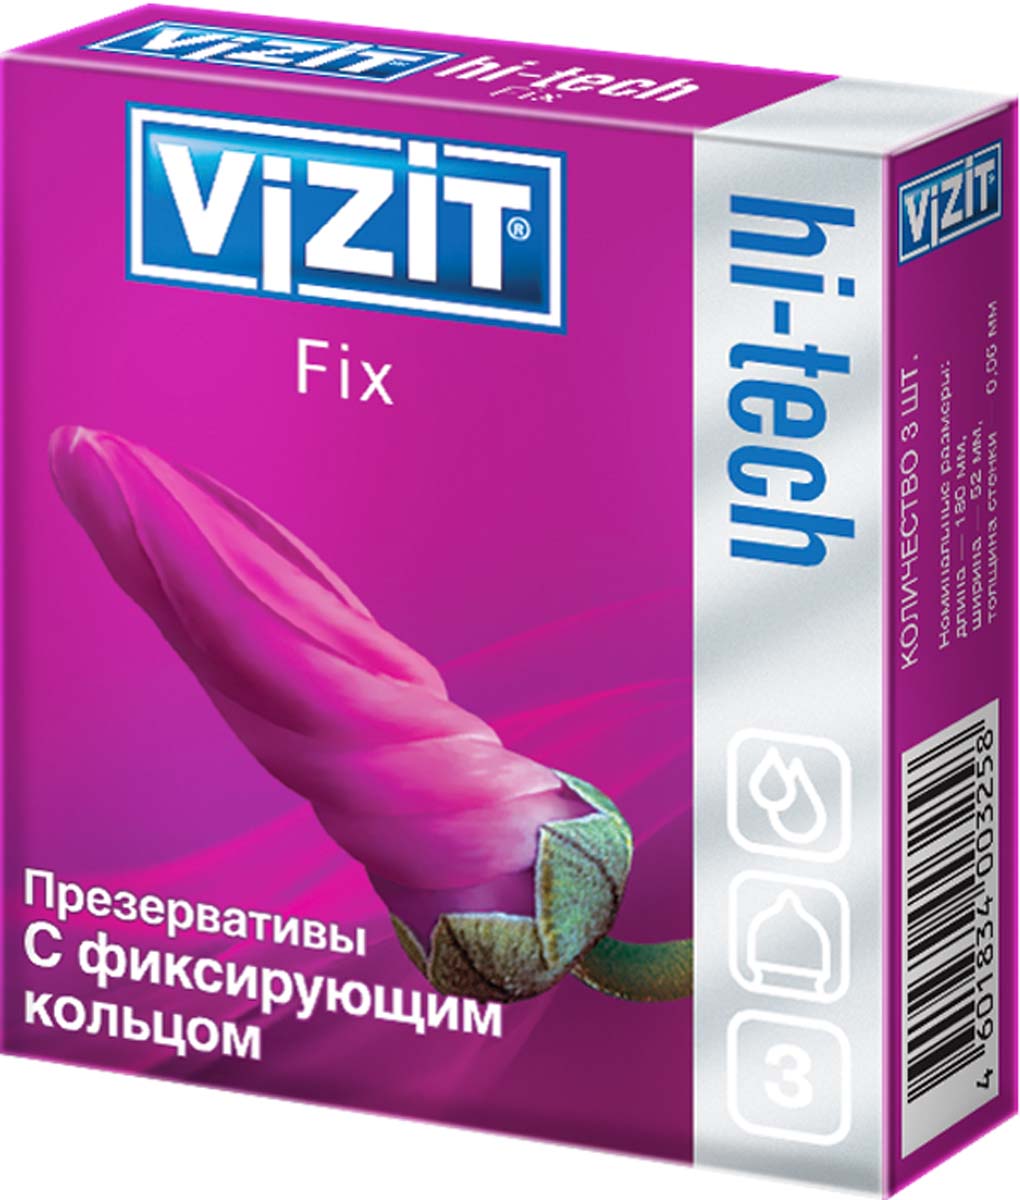 VIZIT Презервативы HI-TECH Fix, с фиксирующим кольцом, 3 шт